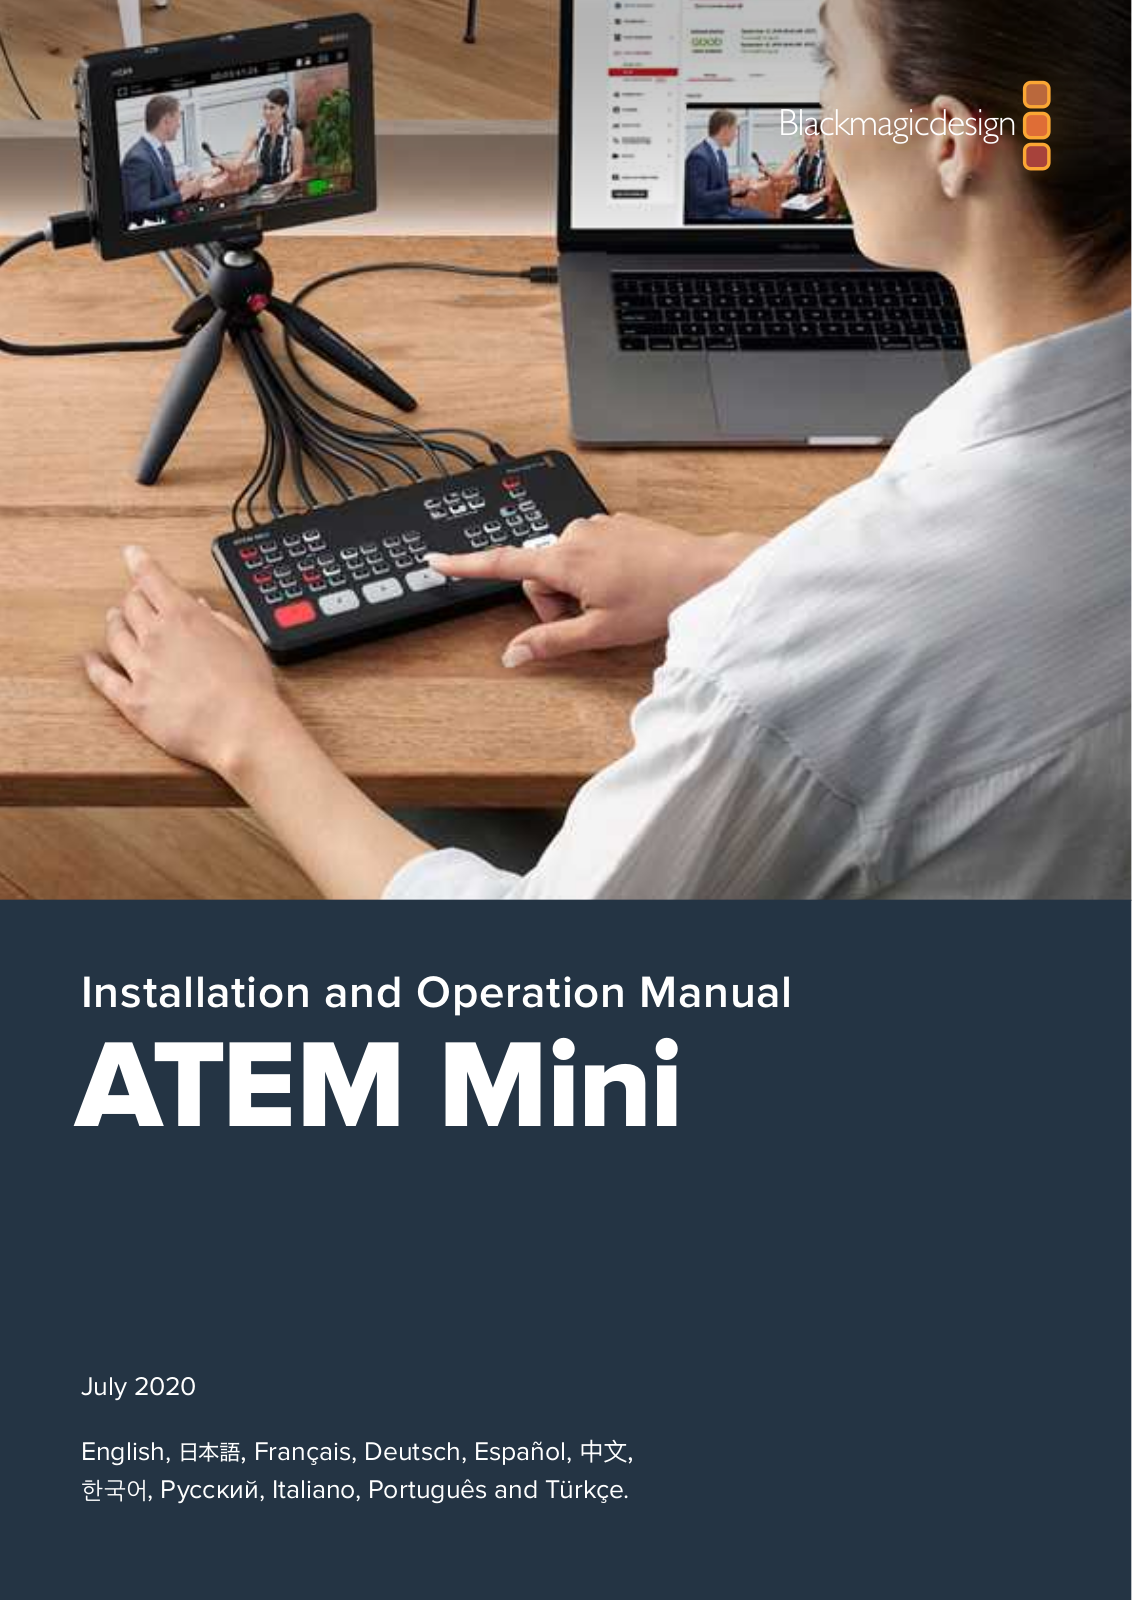 Blackmagic ATEM Mini Installation and Operation Manual